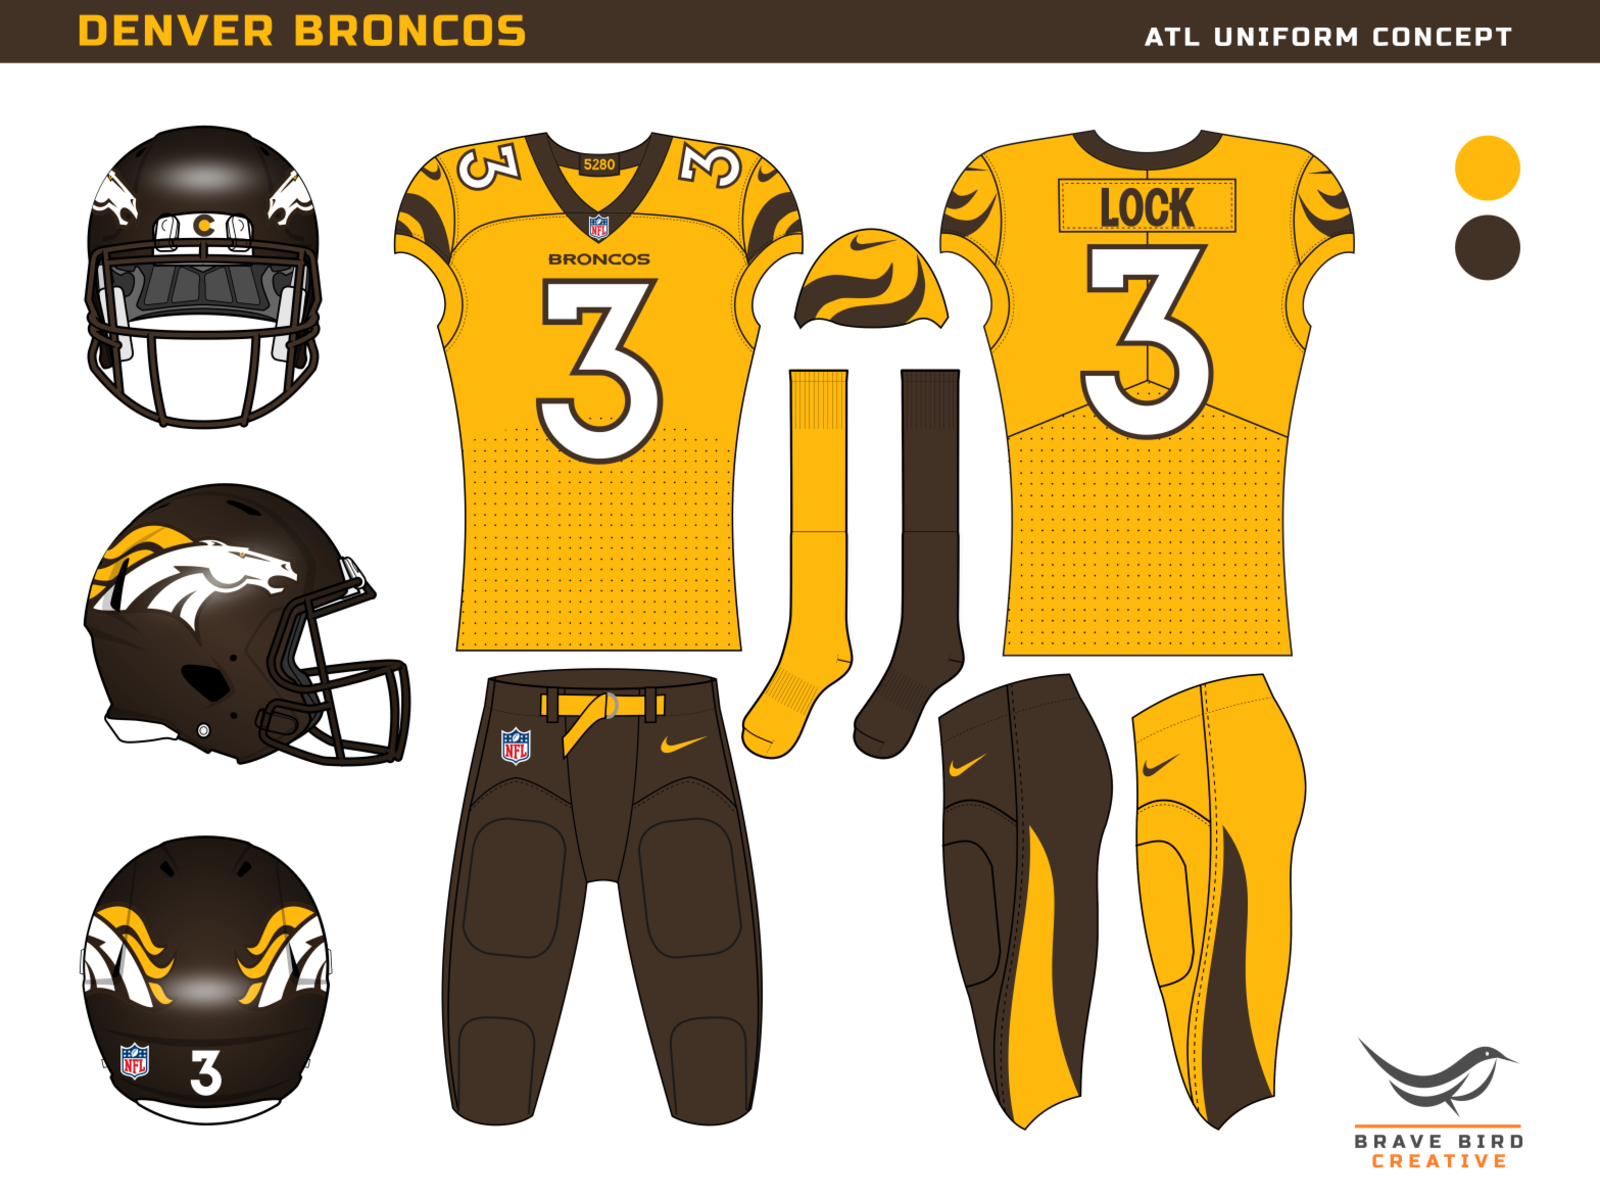 Denver Broncos New Uniforms Concept - Concepts - Chris Creamer's